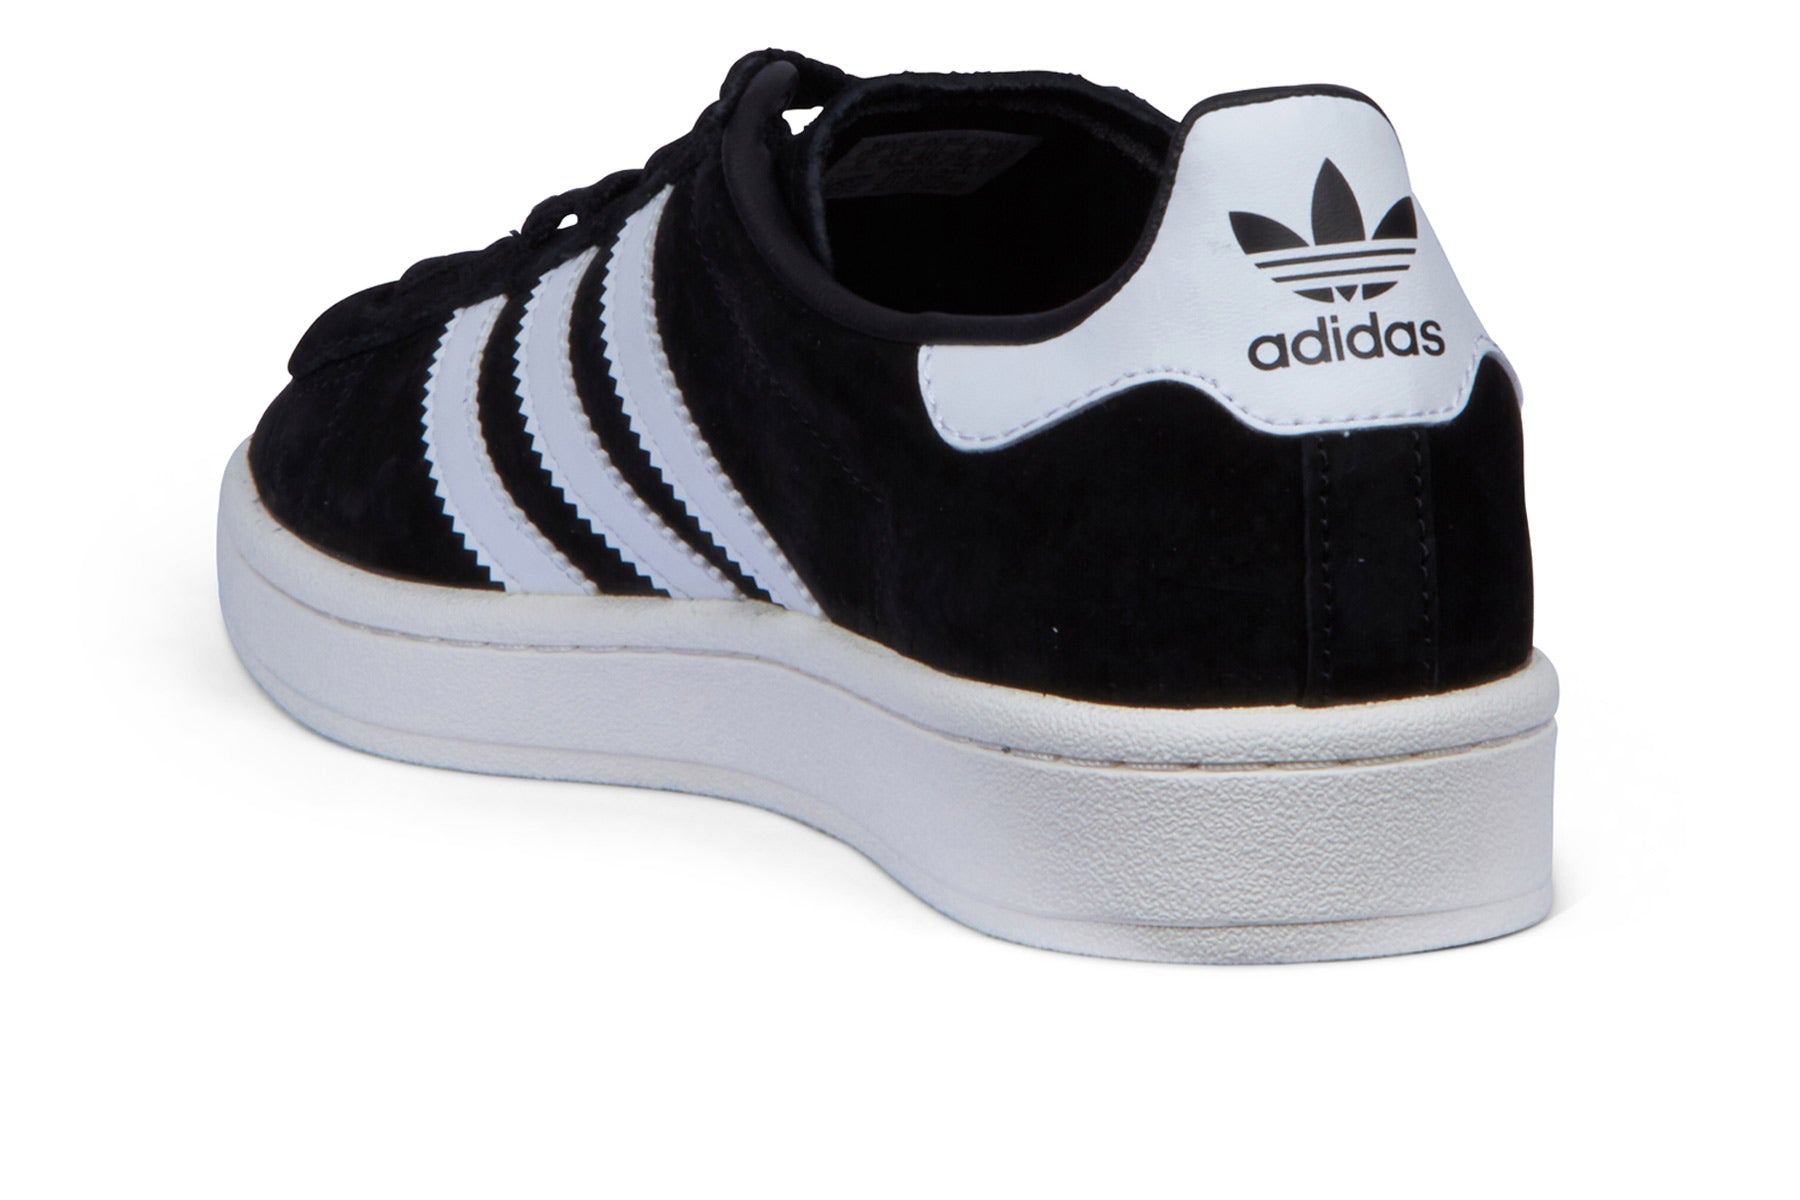 Adidas Campus - Black/Footwear White/Chalk White